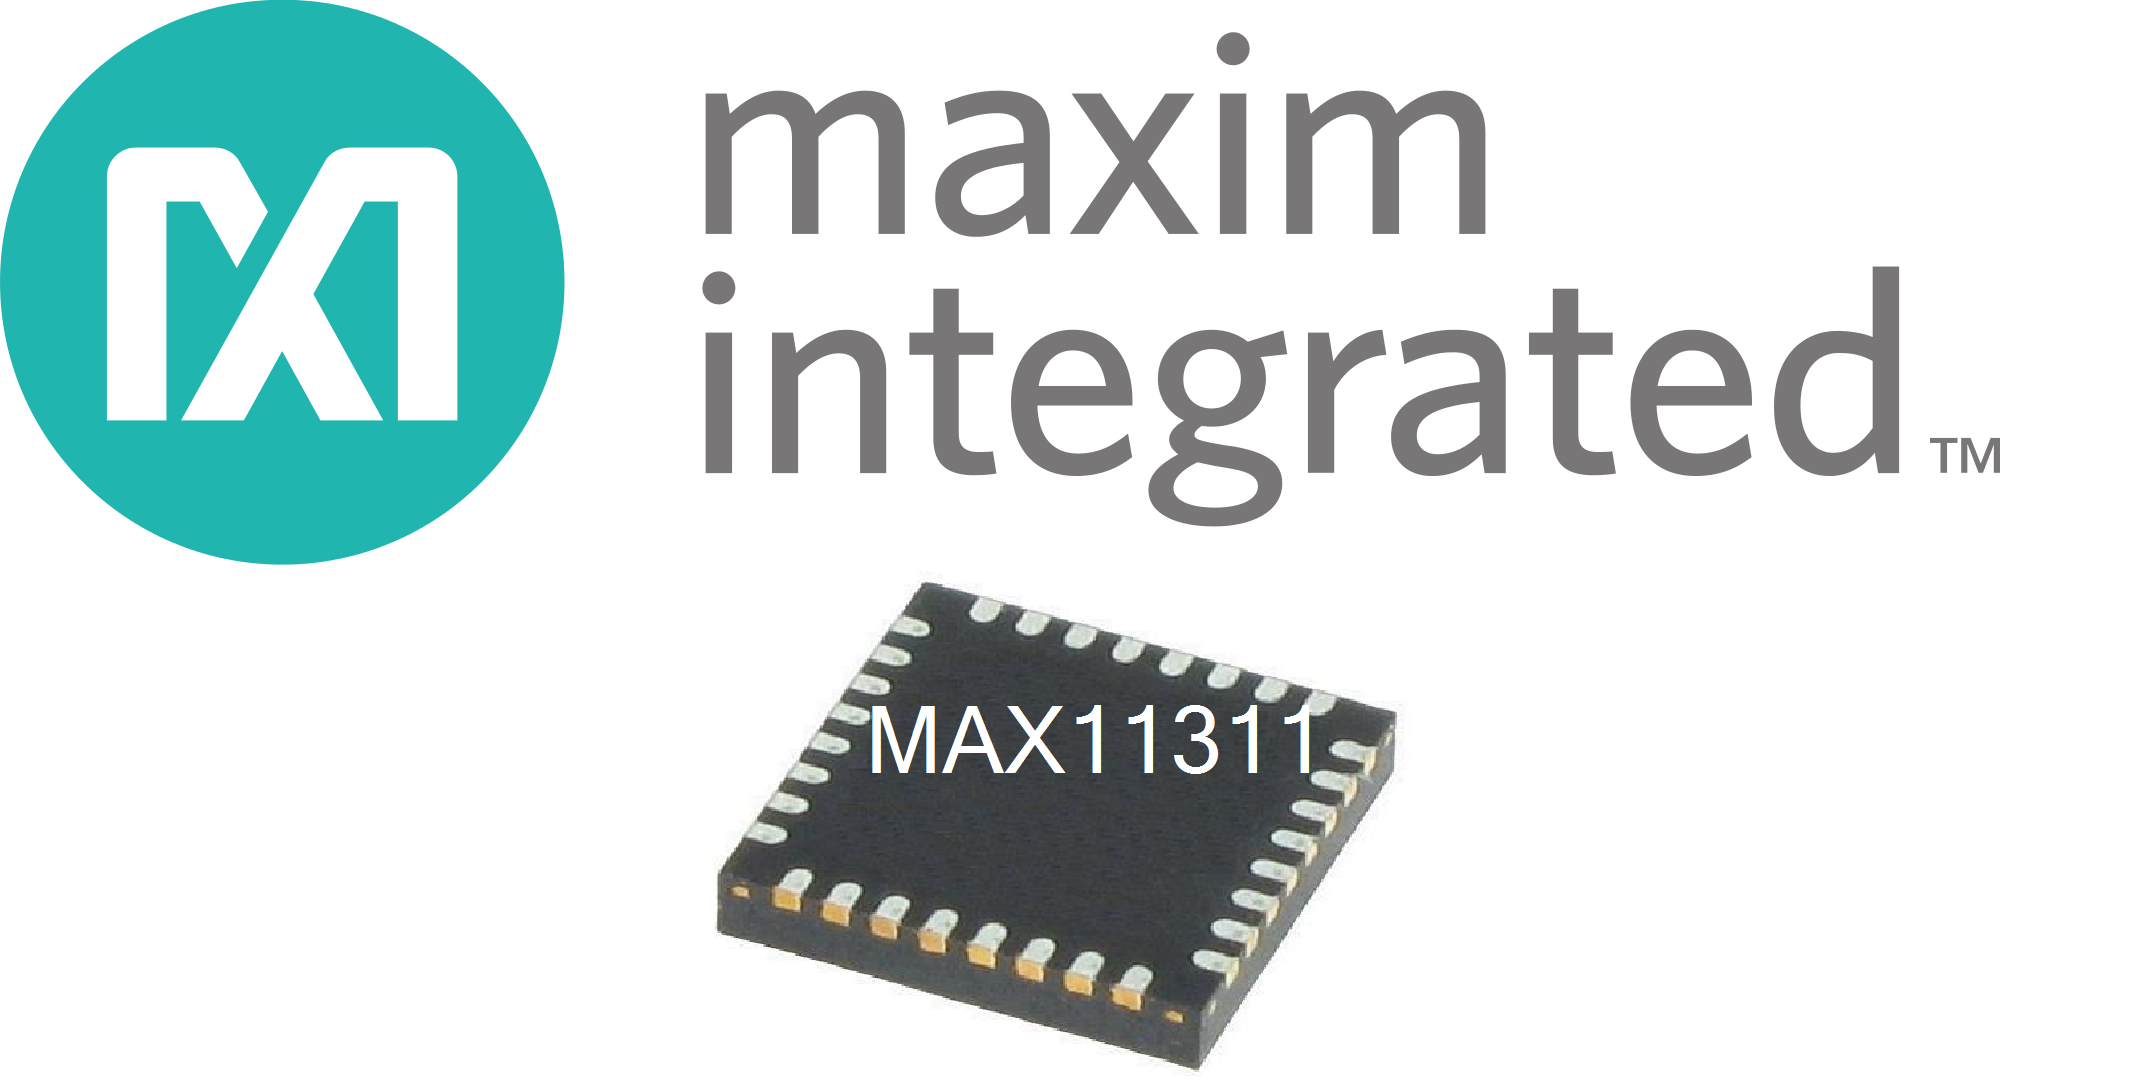 MAX11311 – The Powerful Configurable Mixed Signal I/O